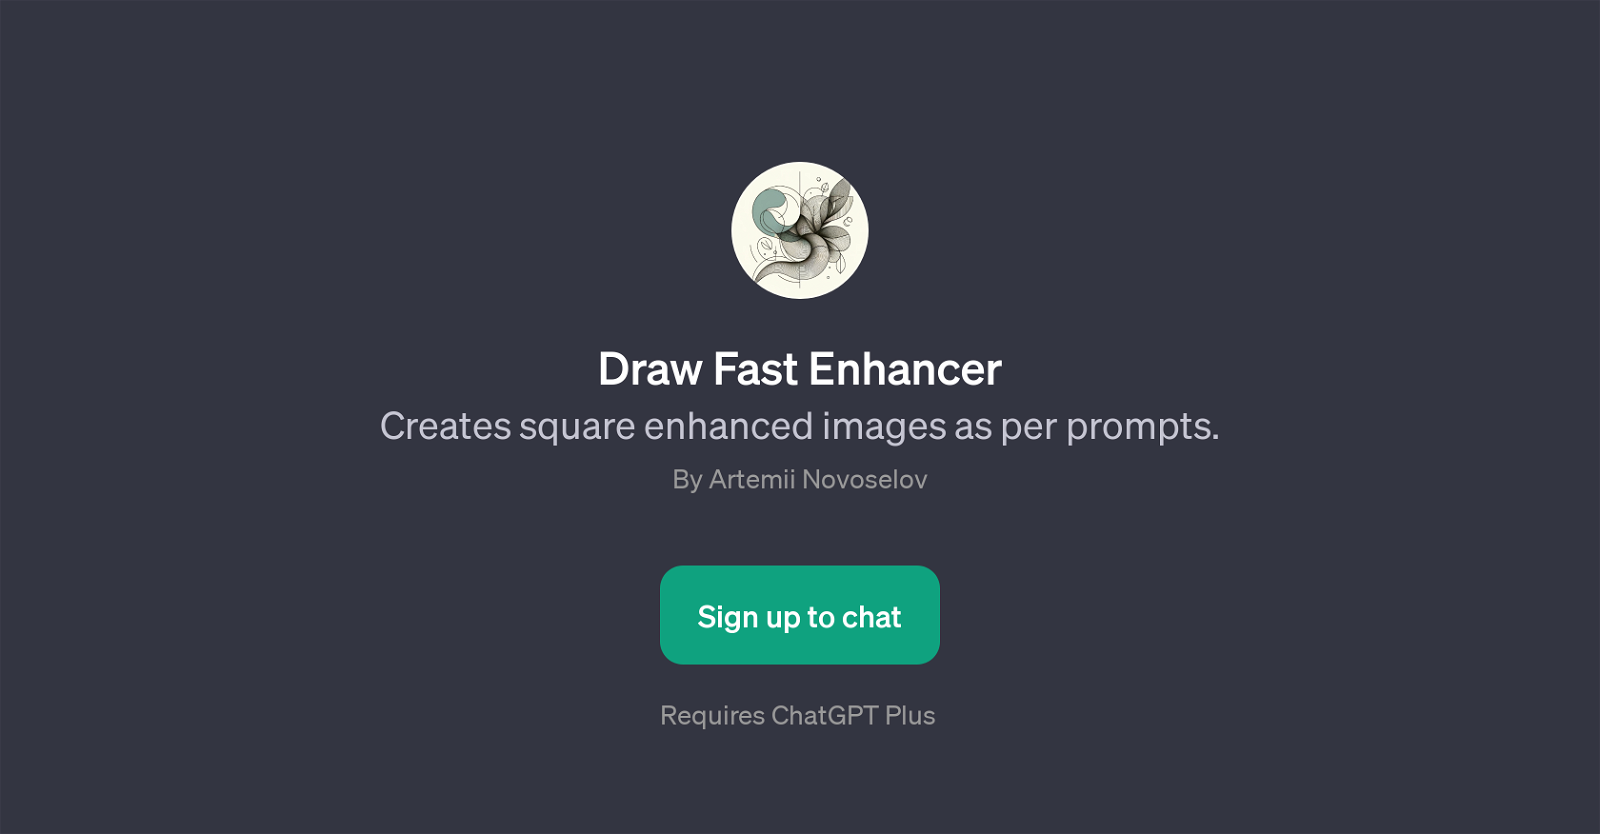 Draw Fast Enhancer website